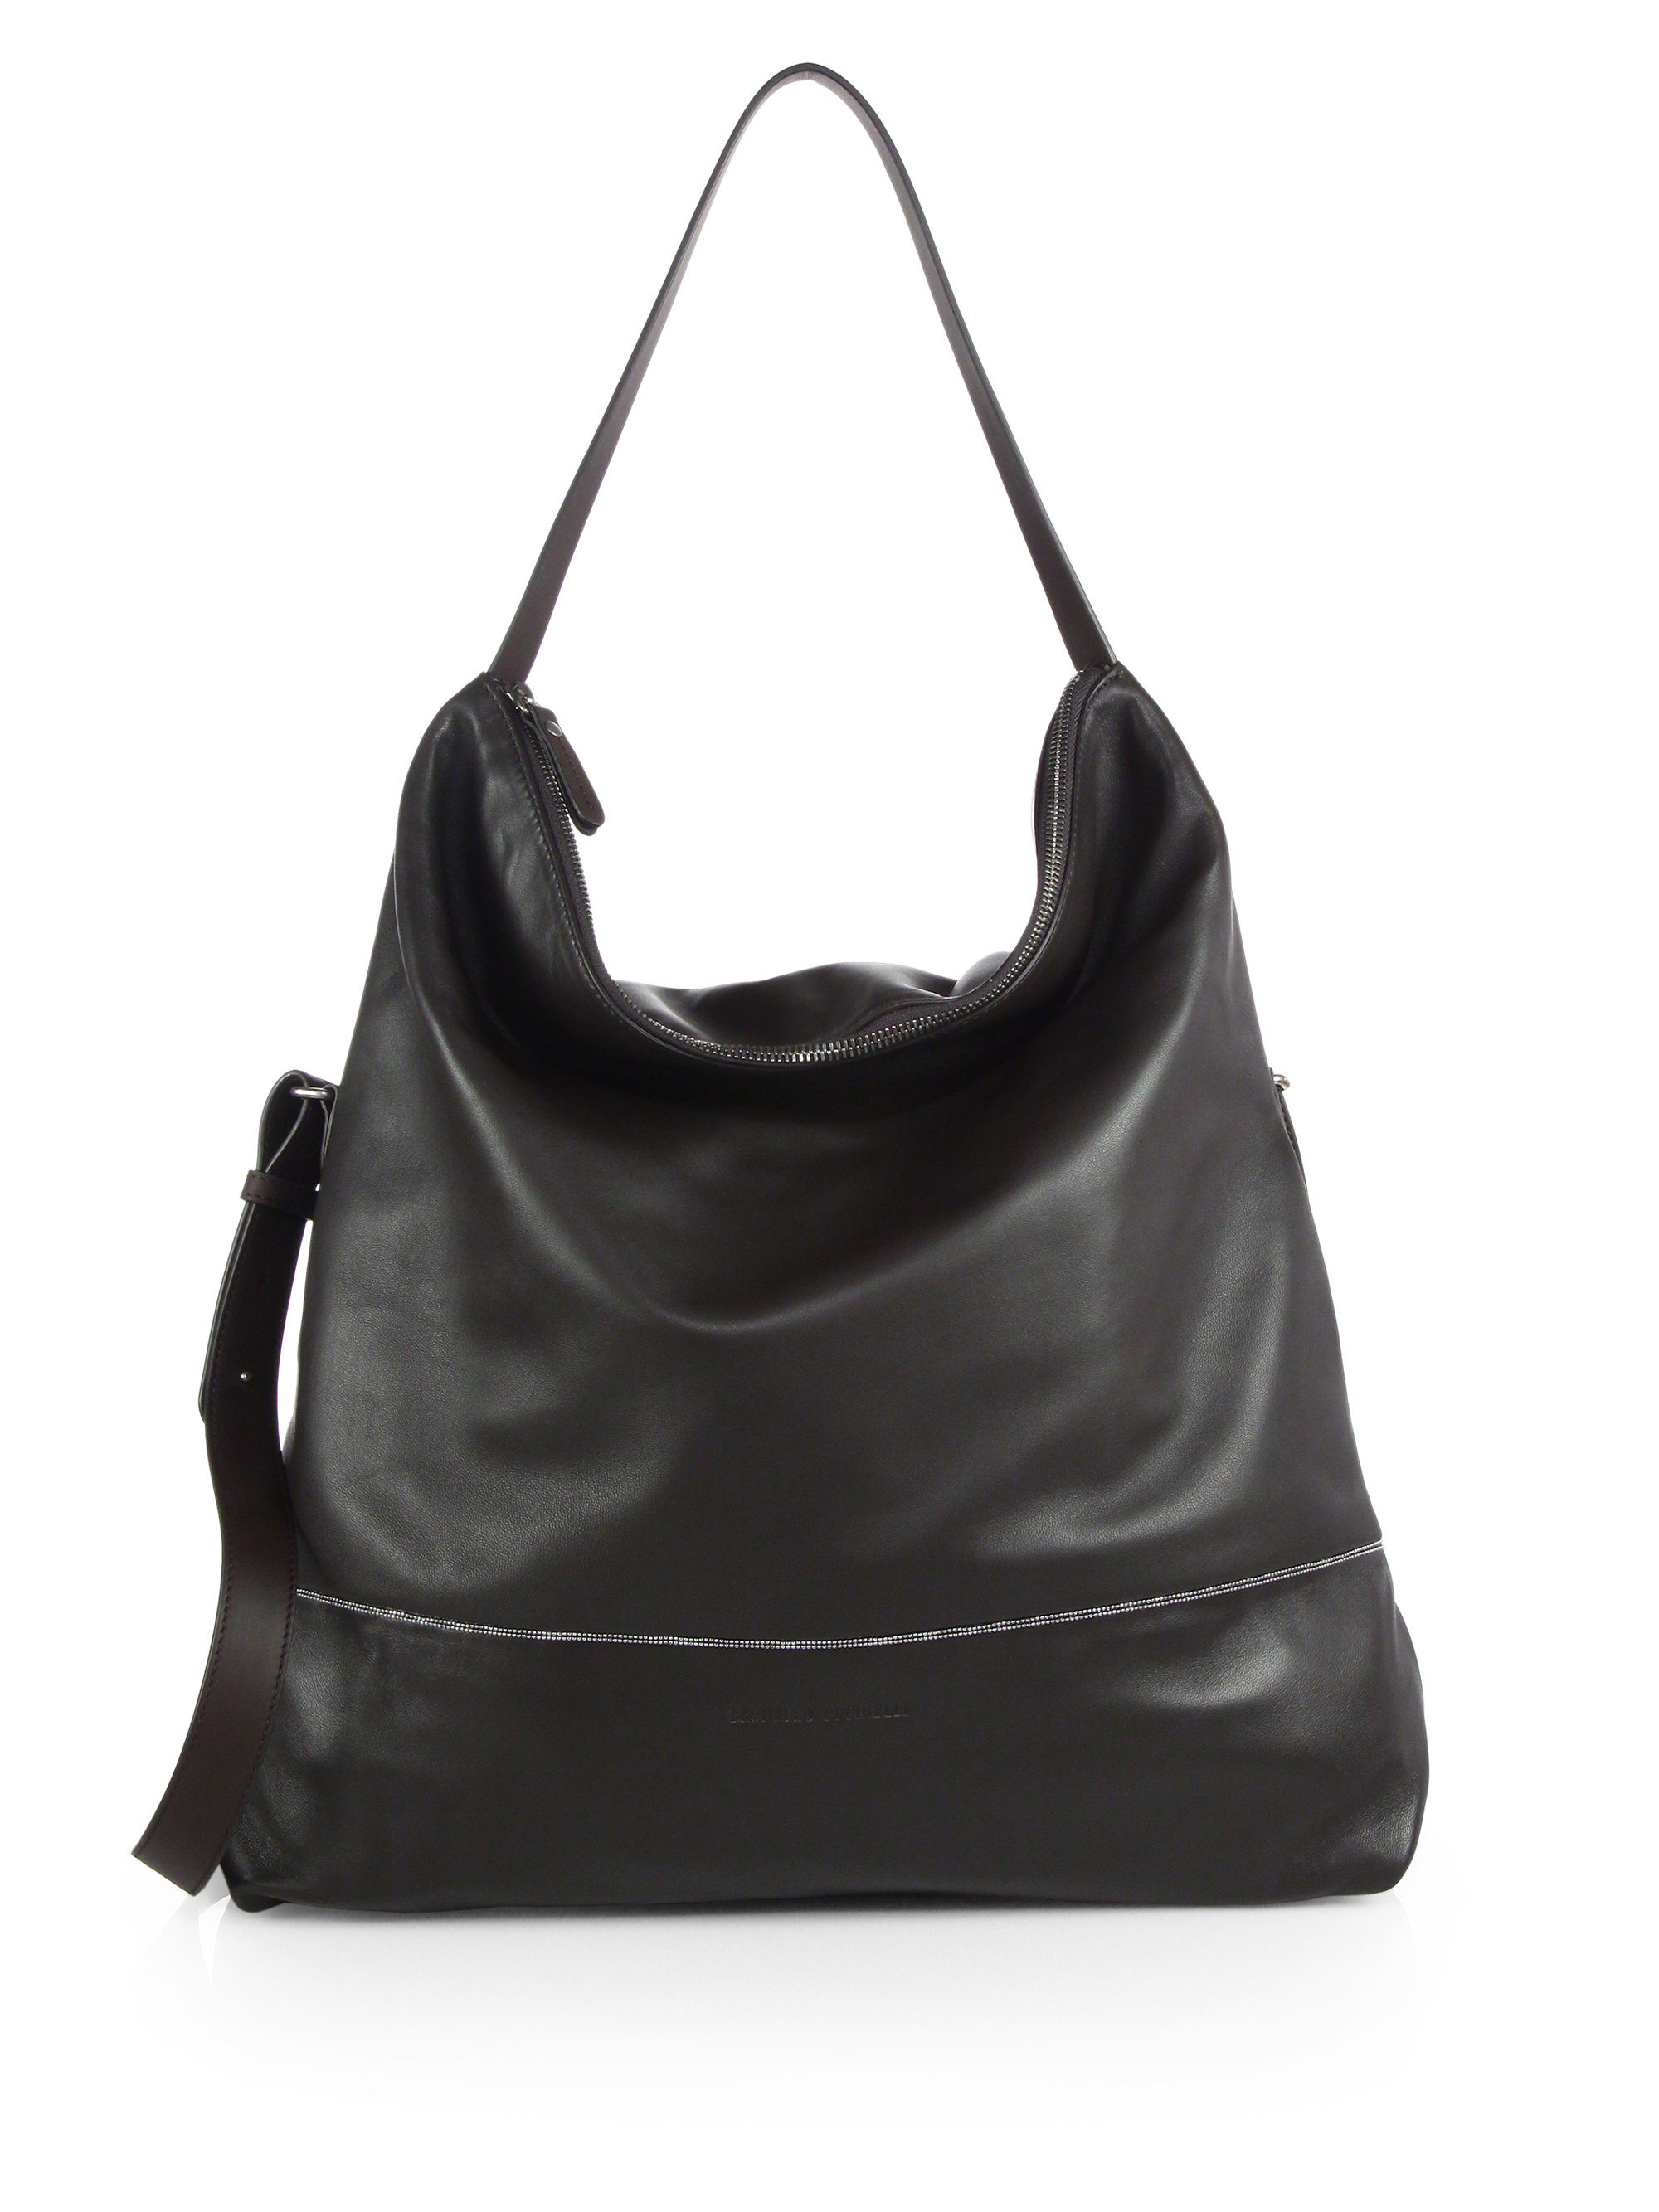 Brunello Cucinelli Leather Hobo Crossbody Bag in Espresso (Black) - Lyst